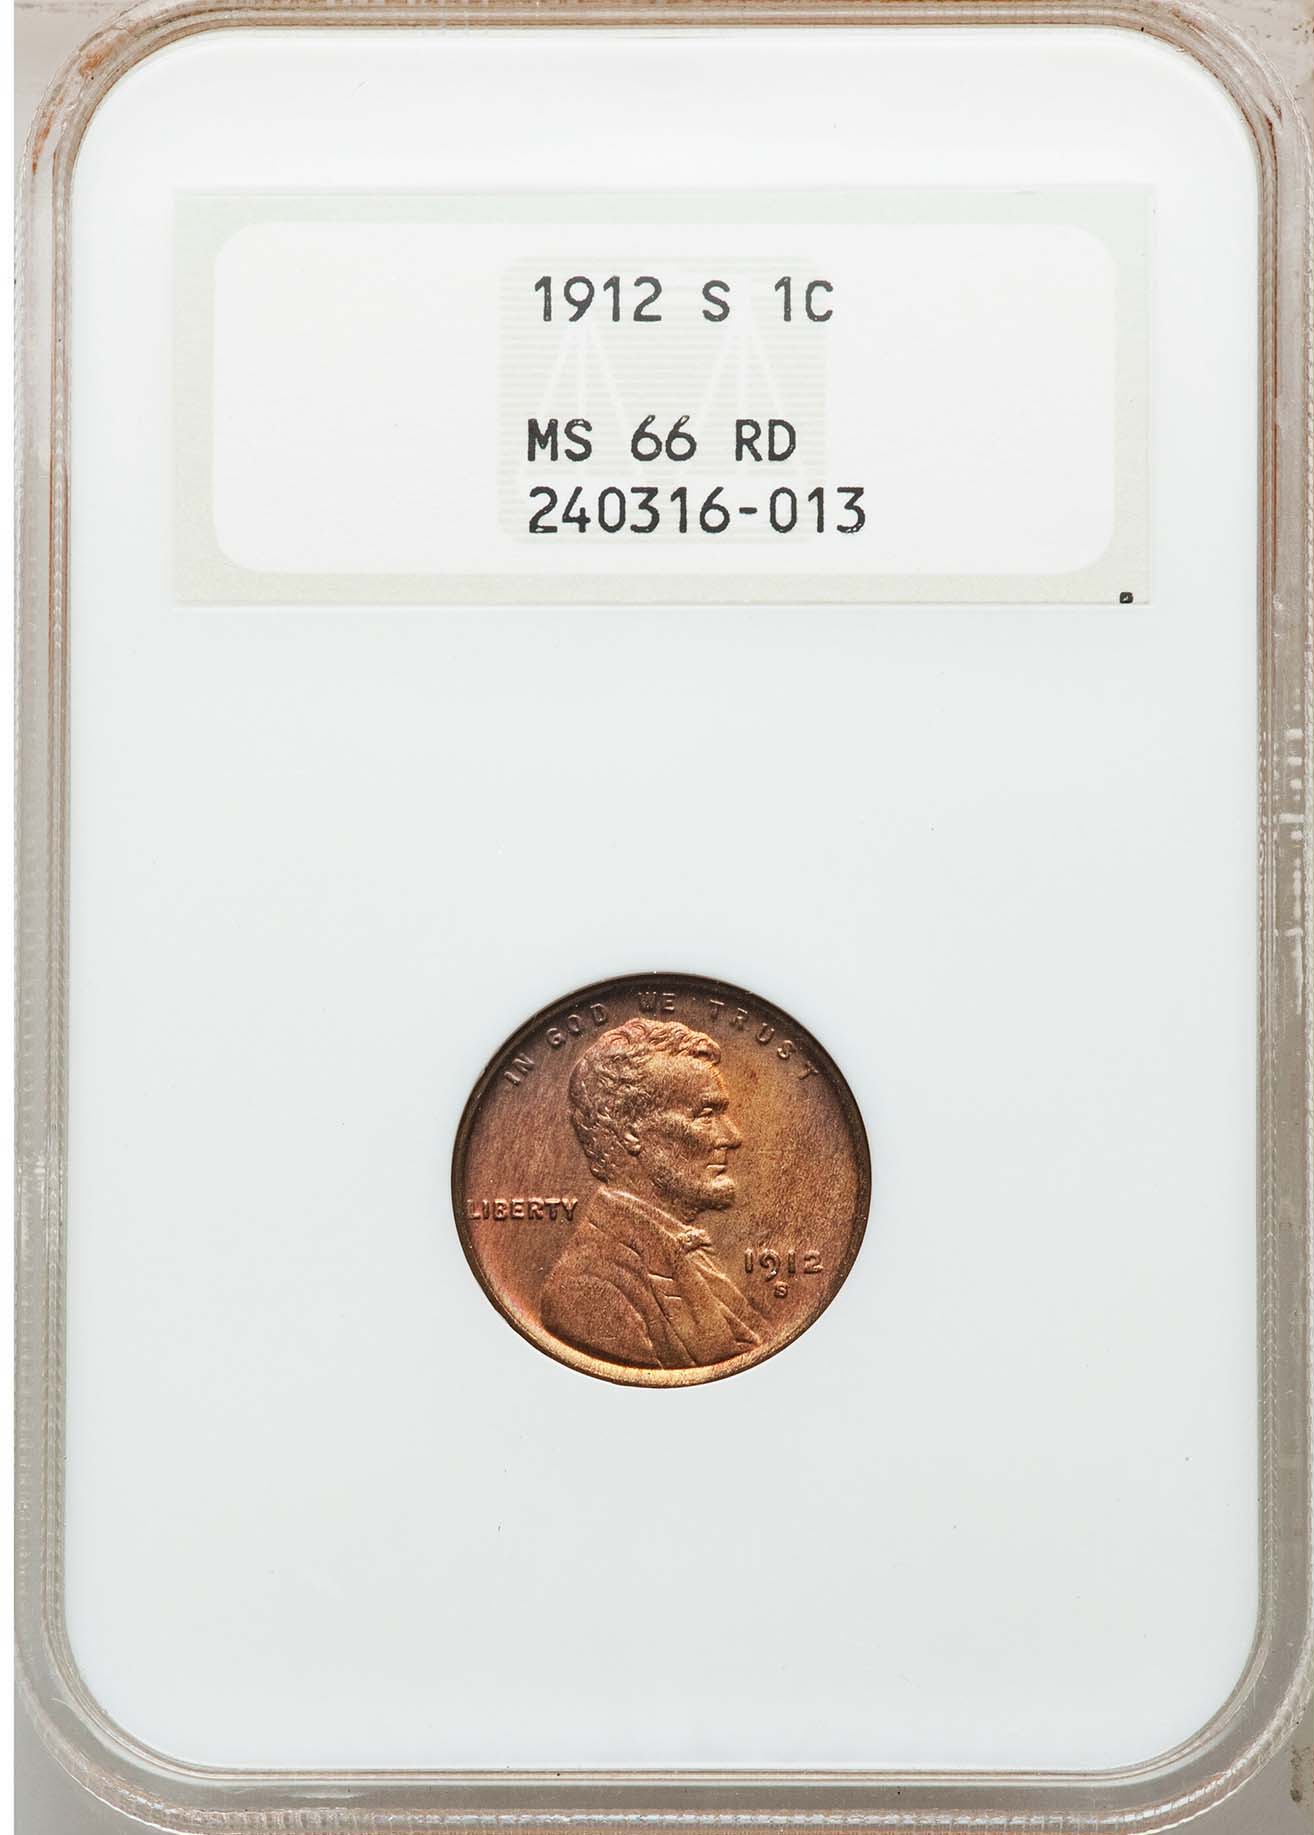 Lincoln 1912 s